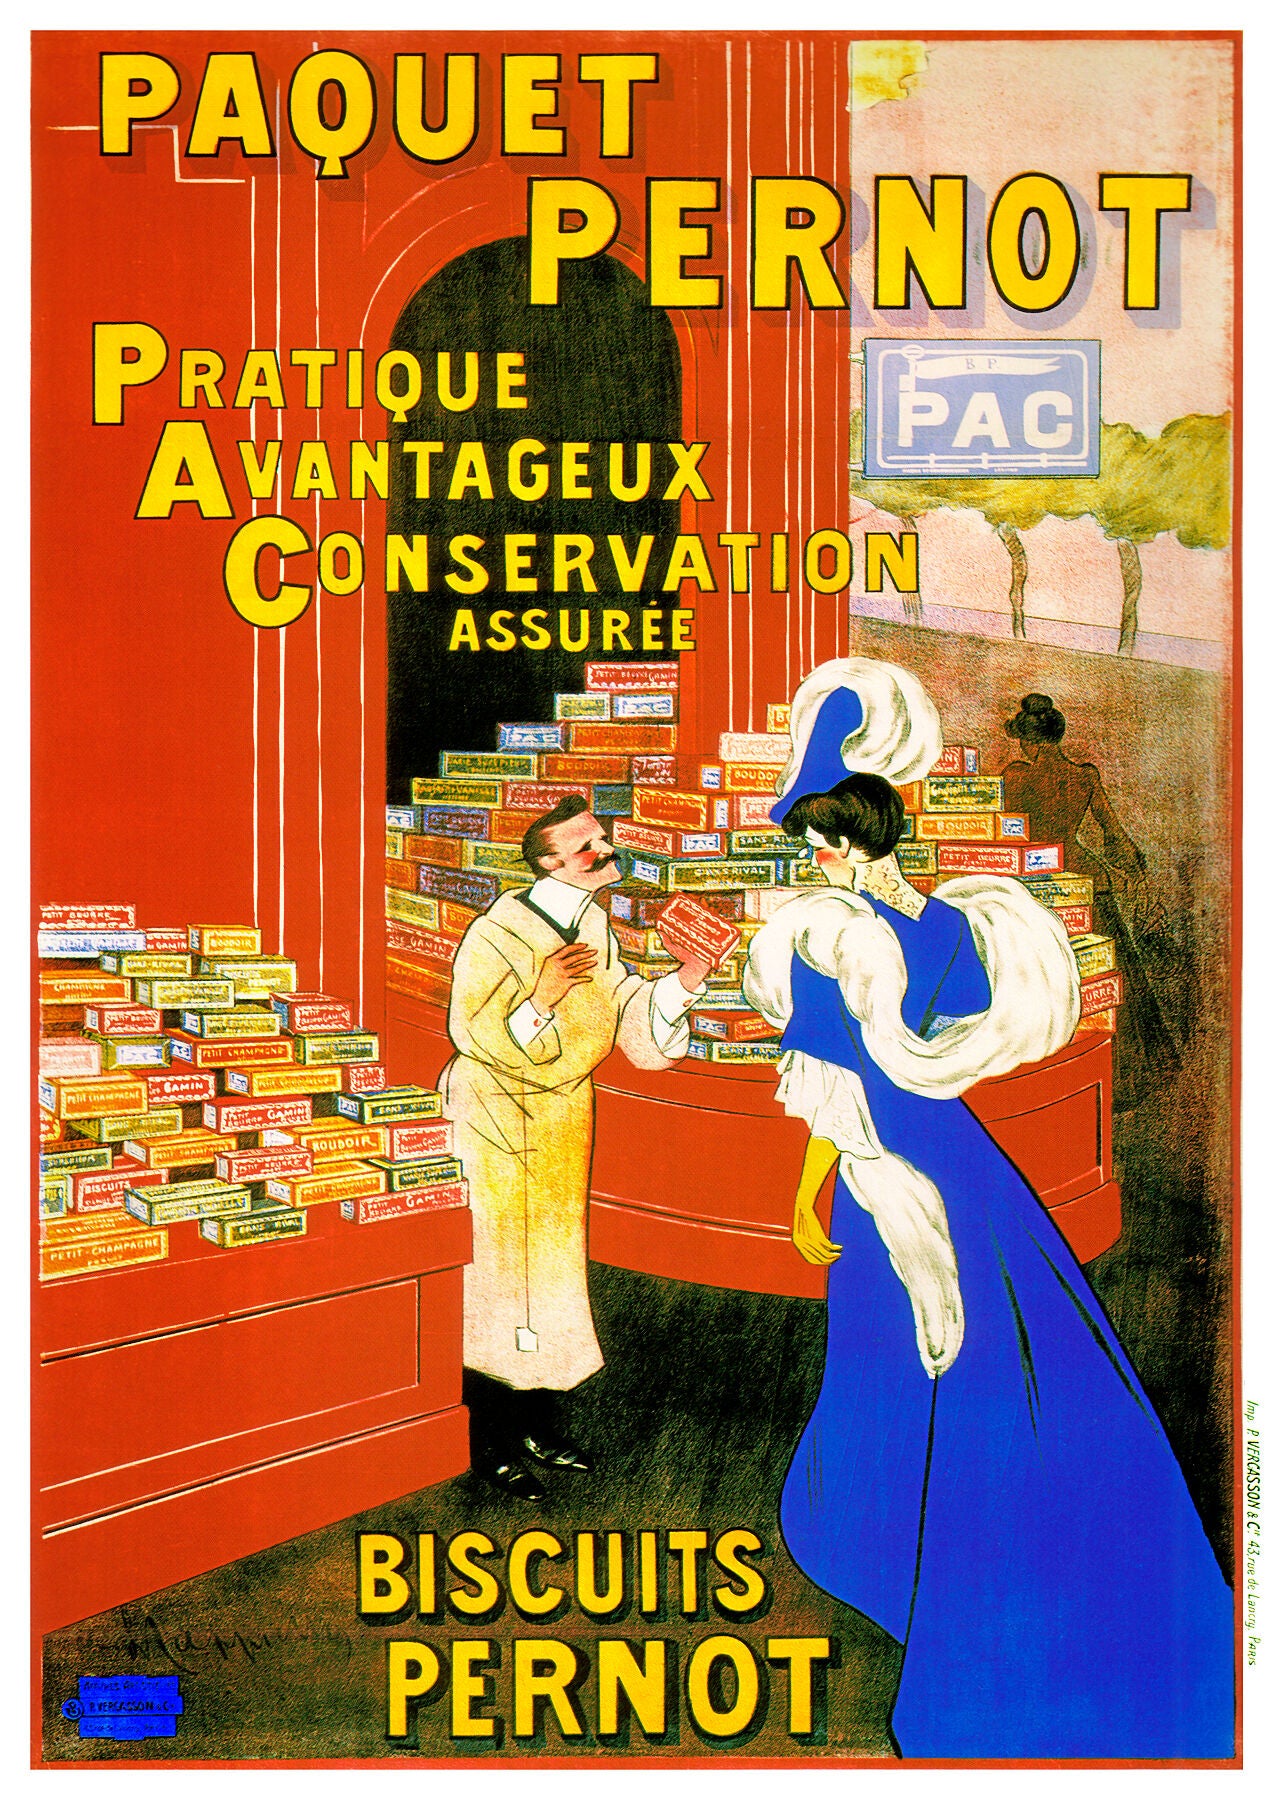 Paquet Pernot poster by Leonetto Cappiello